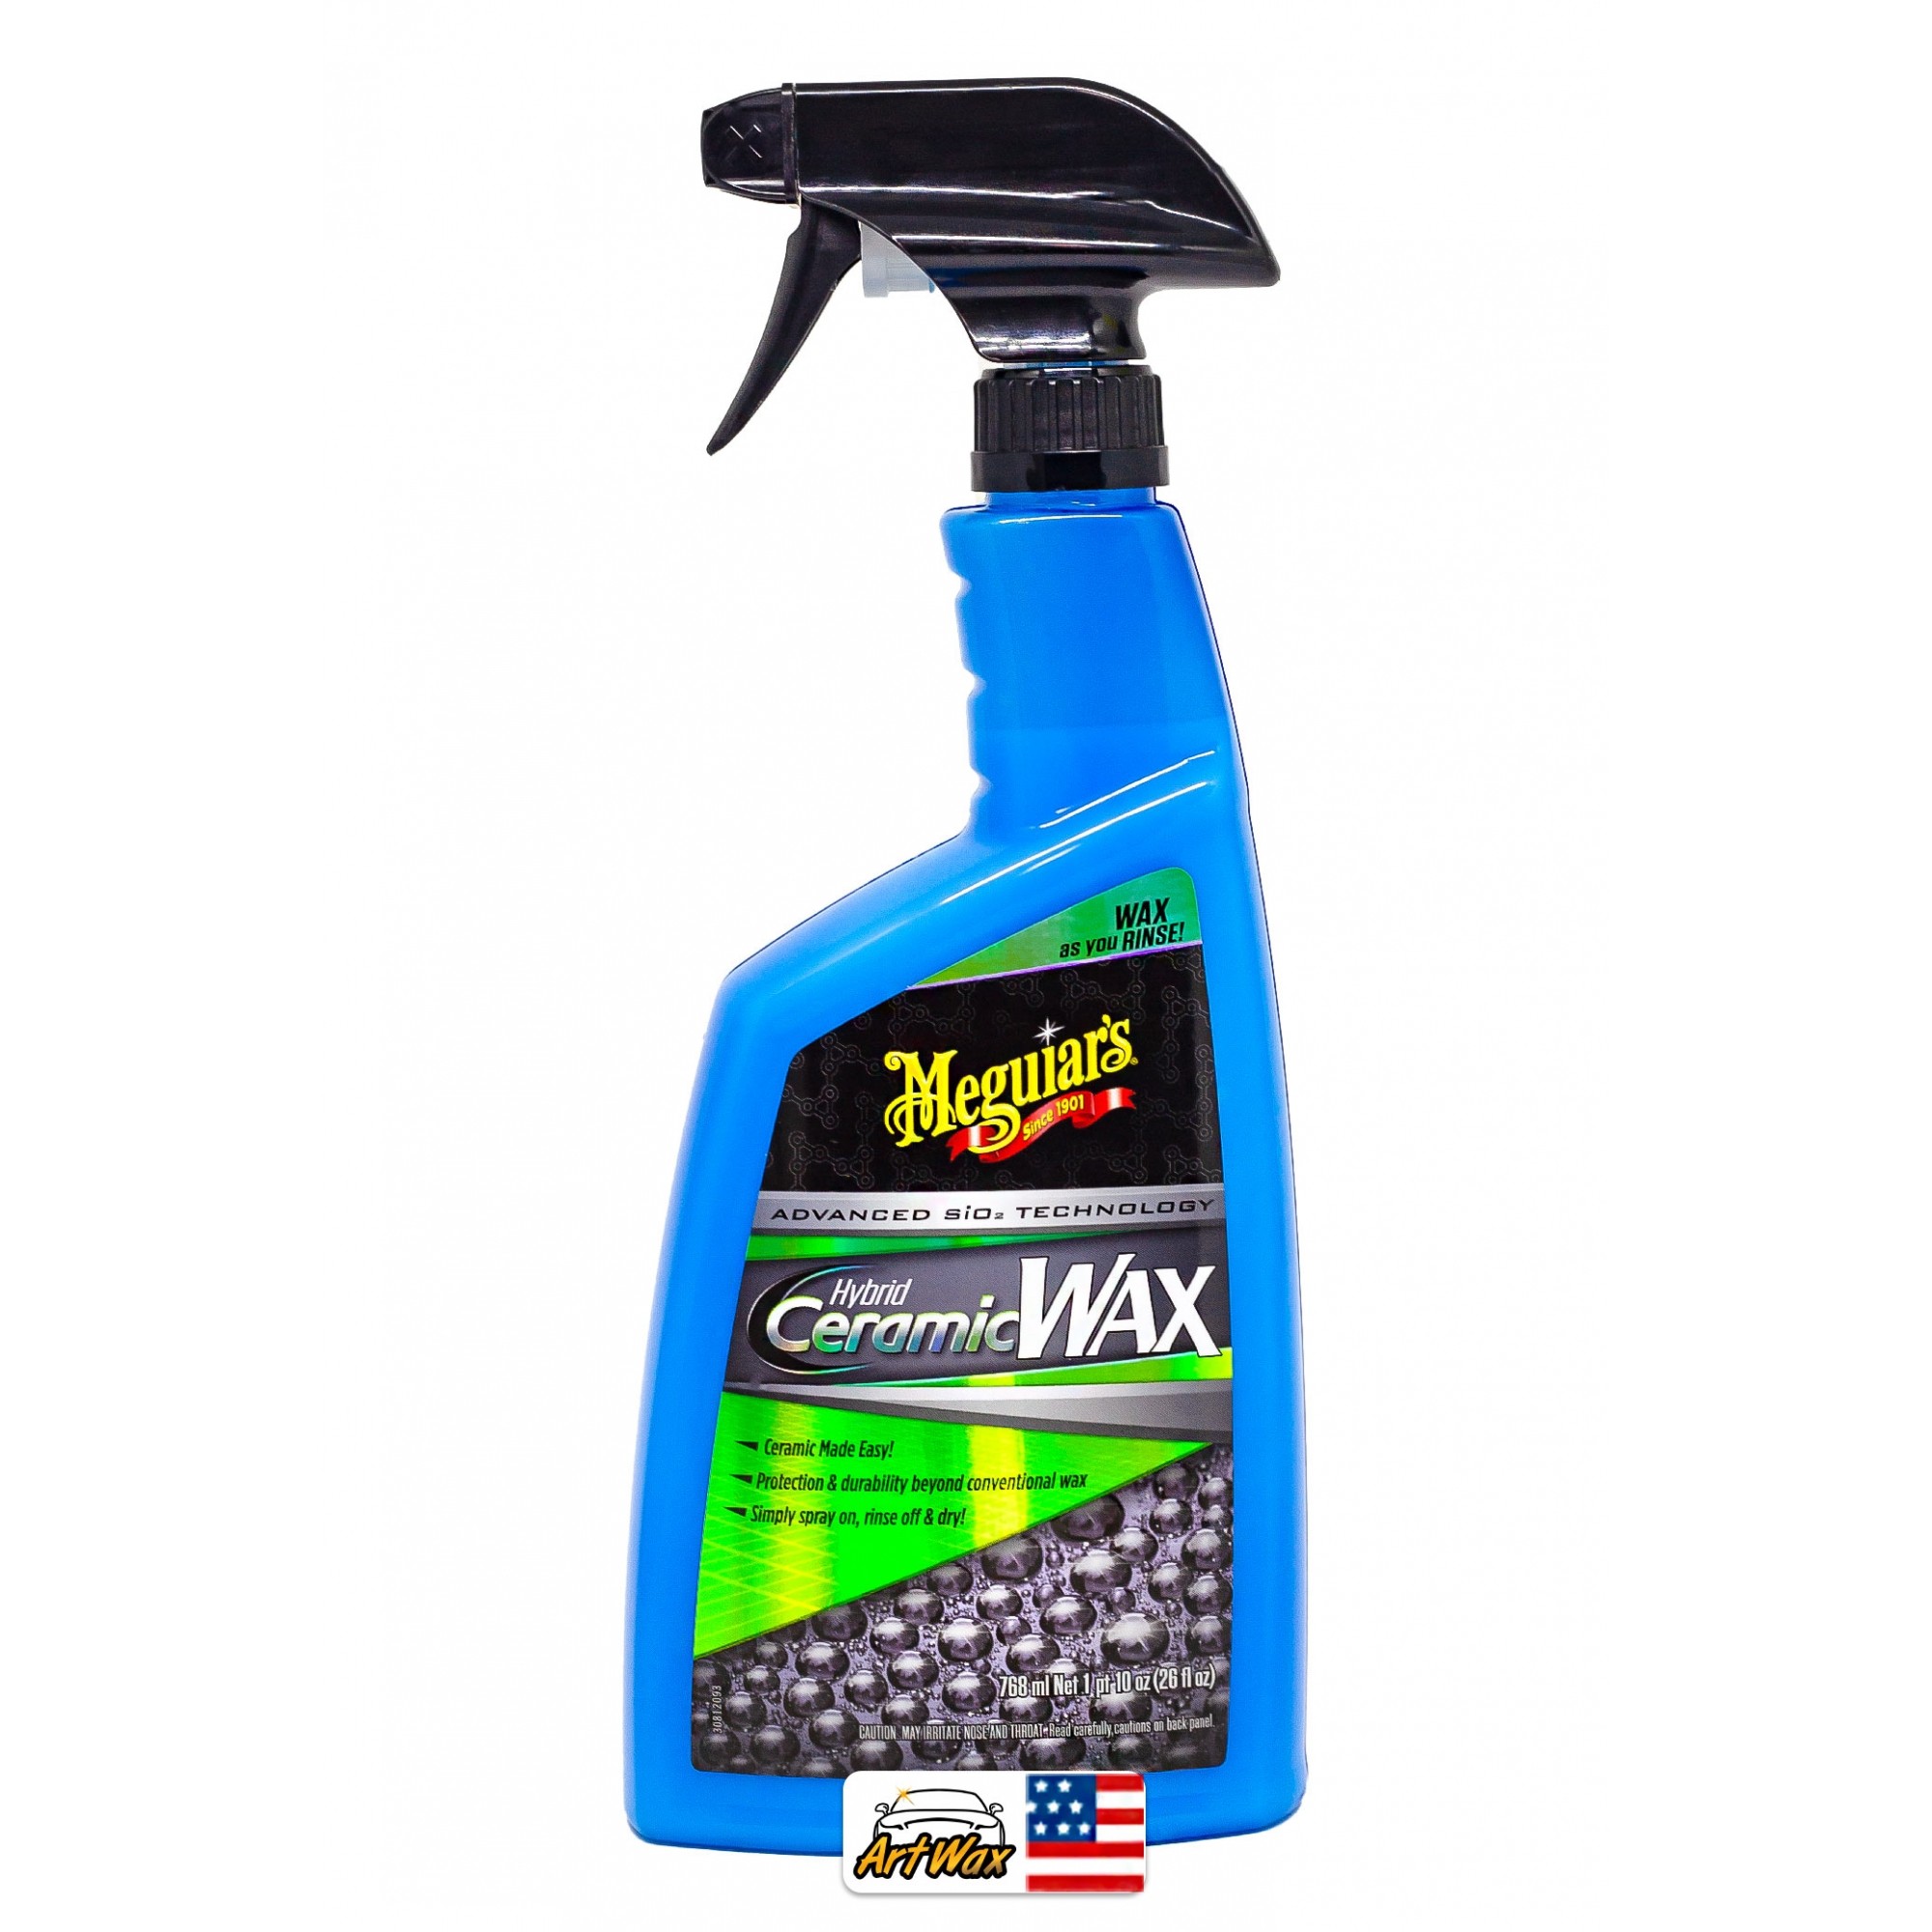 Meguiars Cera Protetora Spray Hybrid Ceramic Wax 768ml - G190526